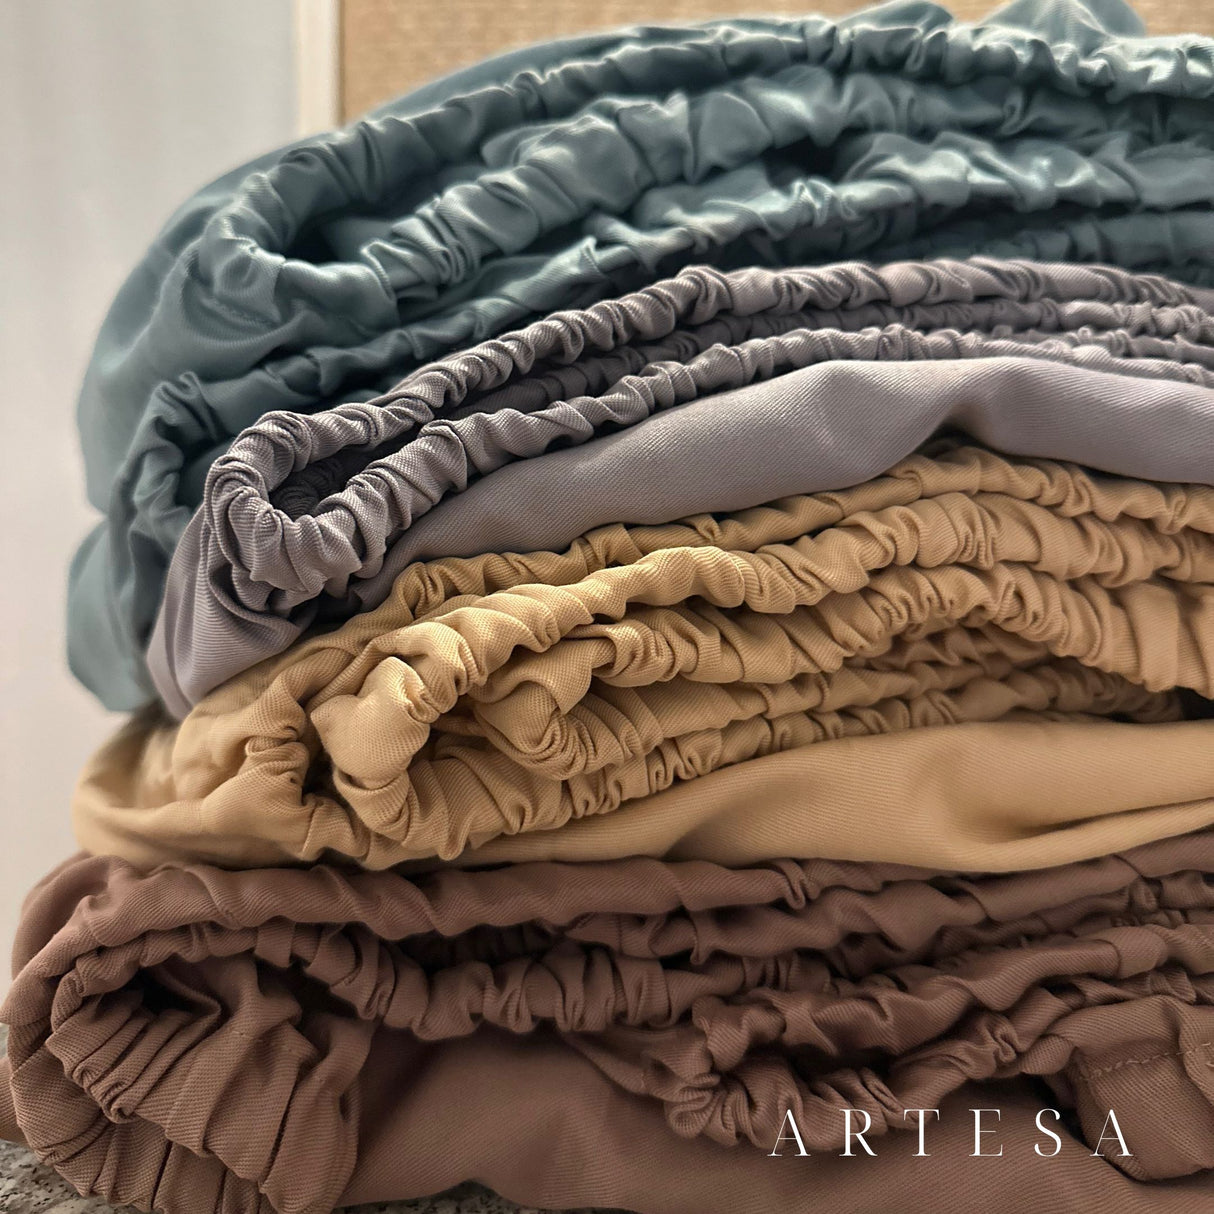 Artesa Luxe 100% Prime Canadian Cotton Flat Sheet Bedding Set - Premium 4-Piece Comfort Ensemble